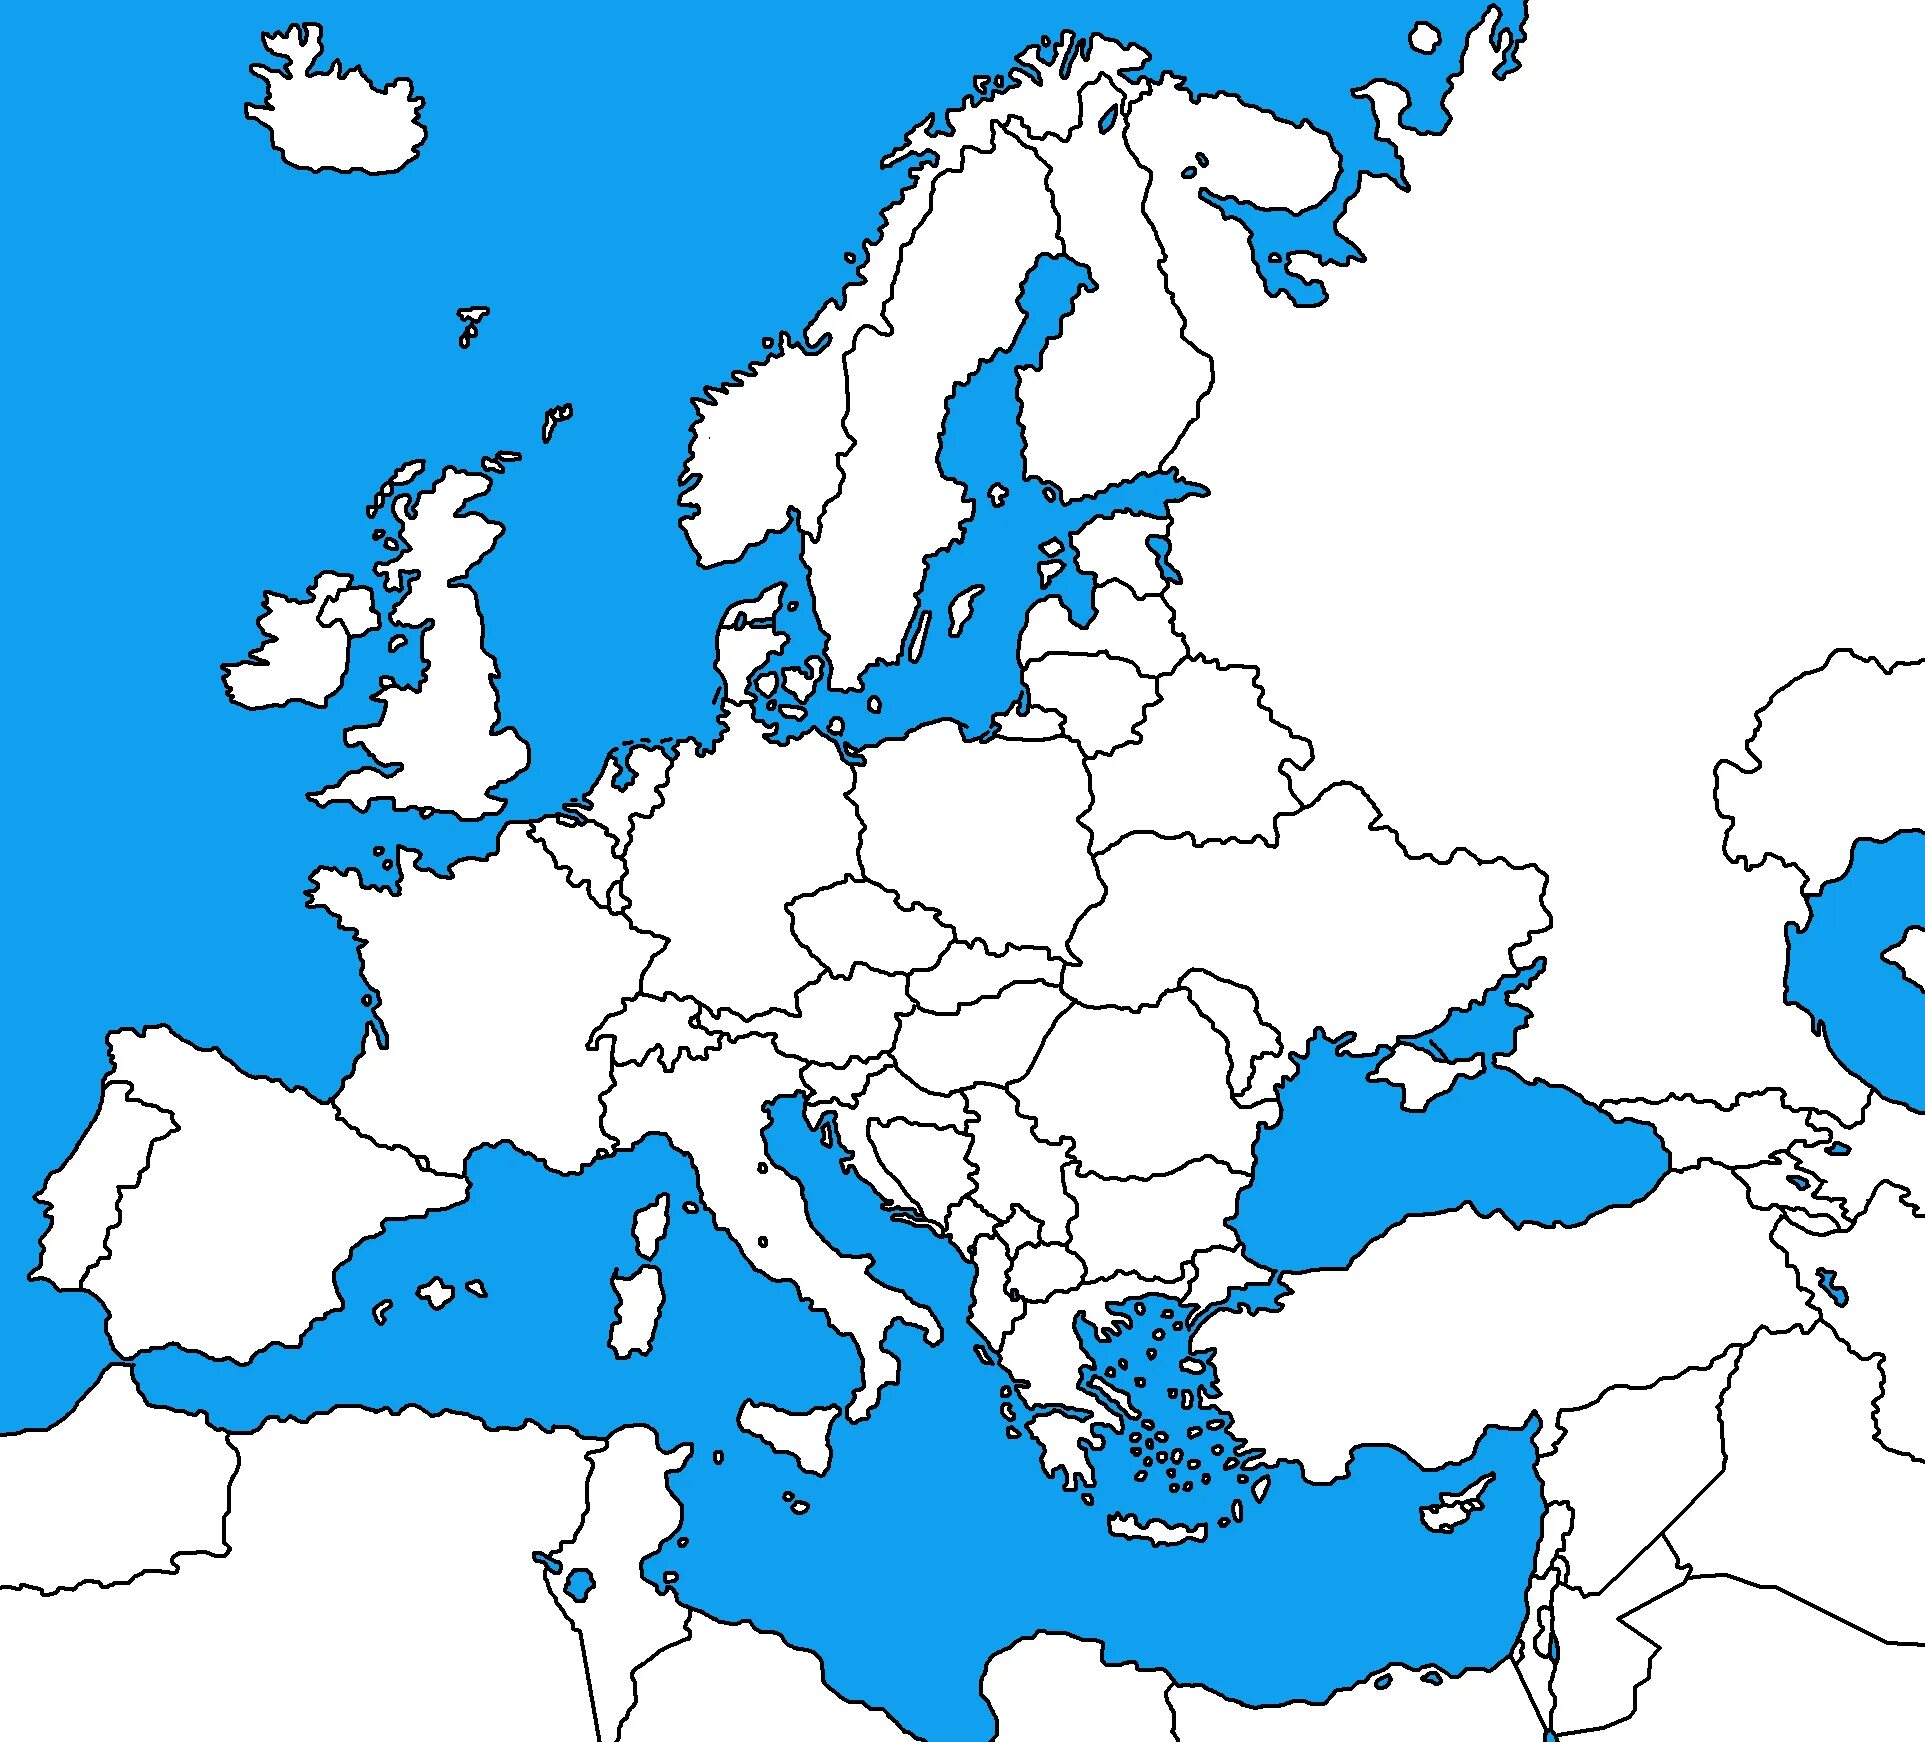 Maps for mapping. Карта Европы маппинг. Карта Европы 1914 для маппинга белая. Карта Европы для мапперов. Карта Европы 2020 года для маппинга.